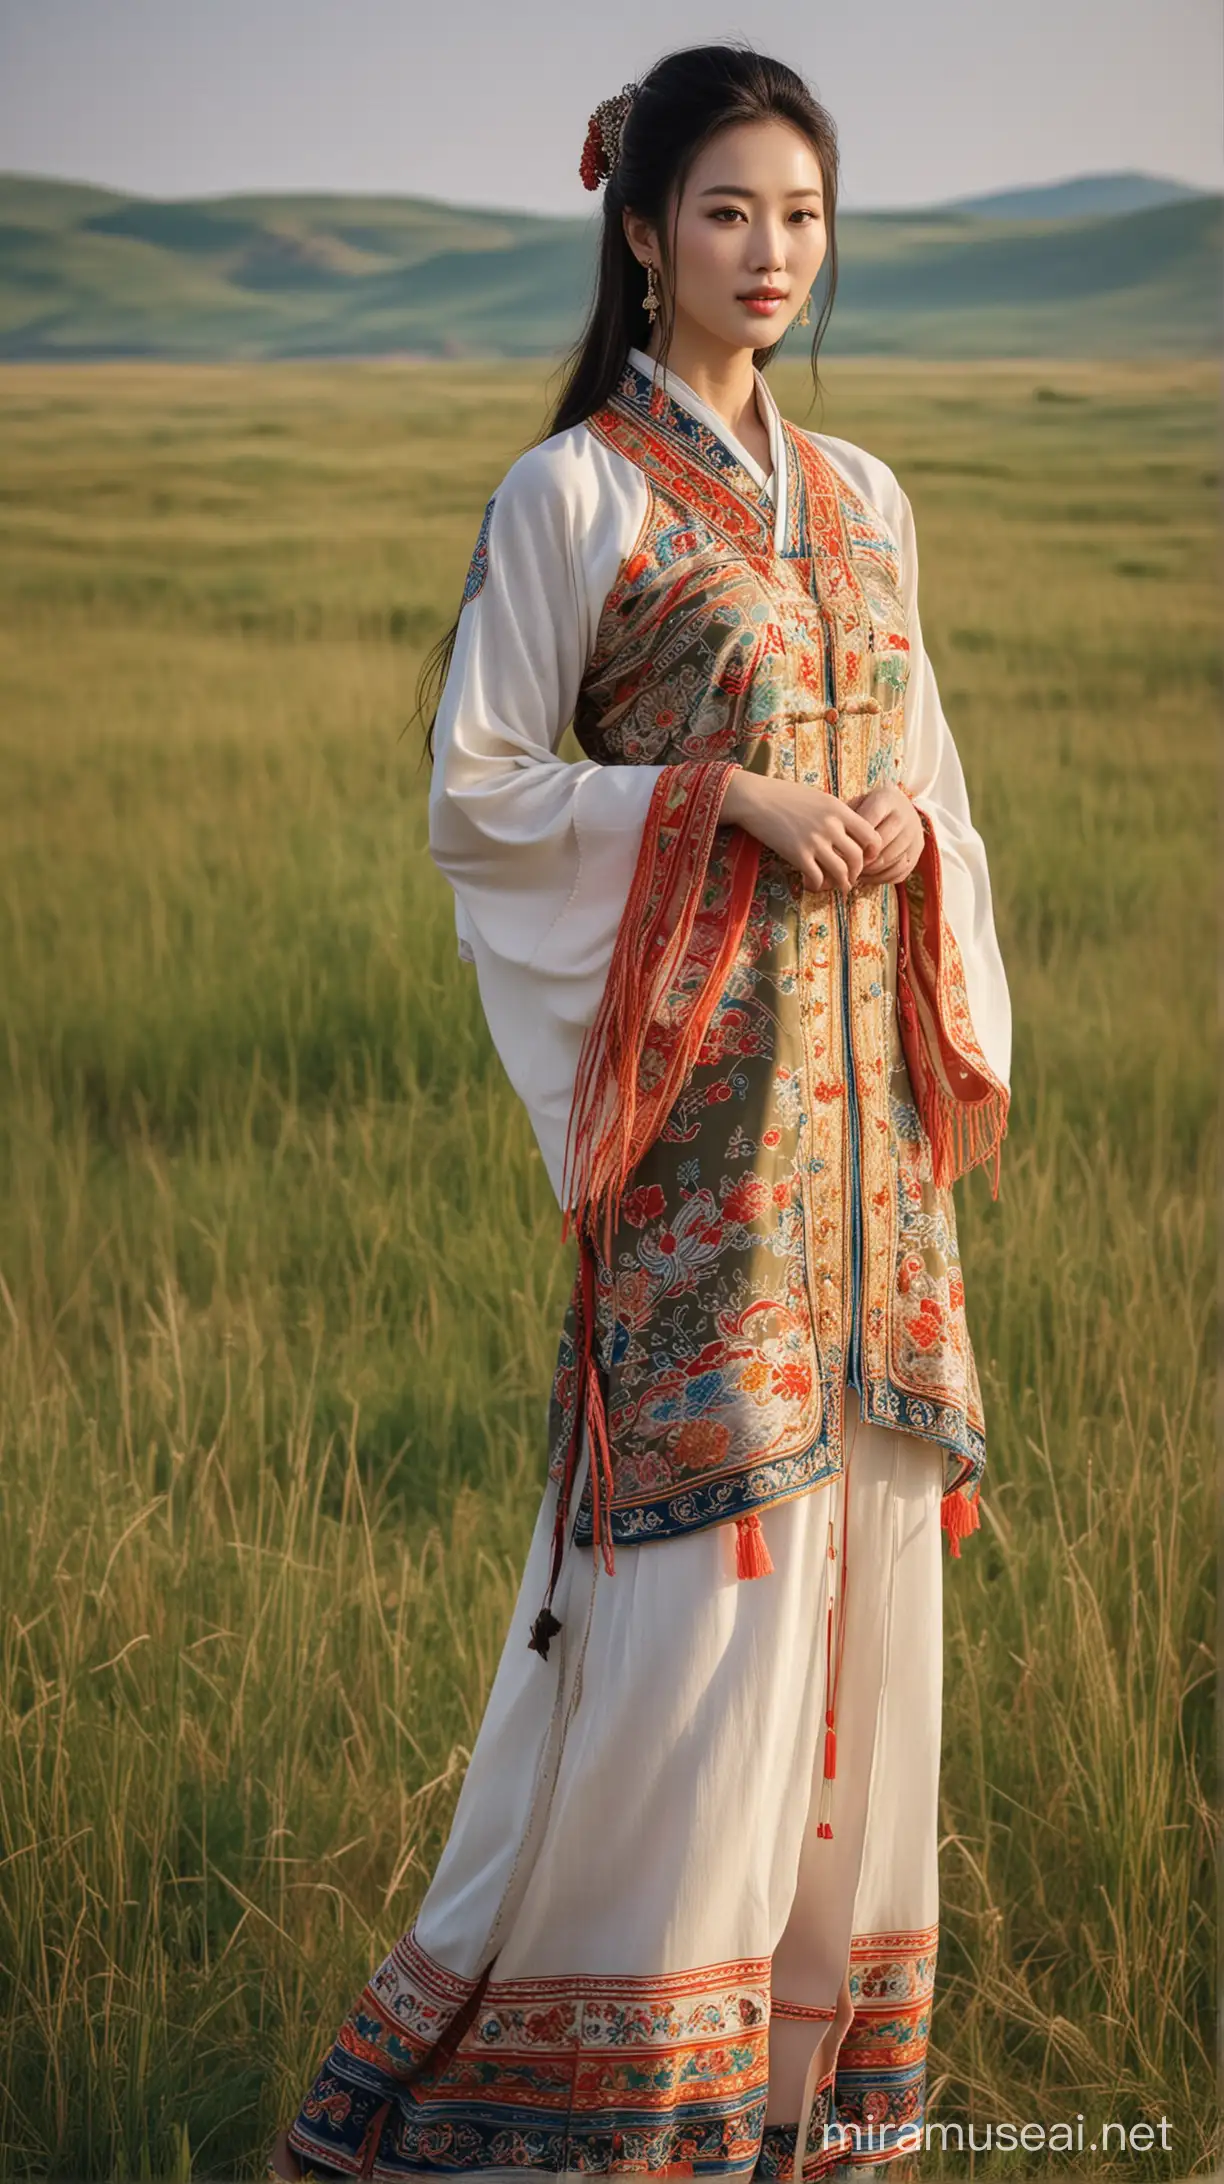 Chinese Ethnic Beauty on Inner Mongolian Grasslands